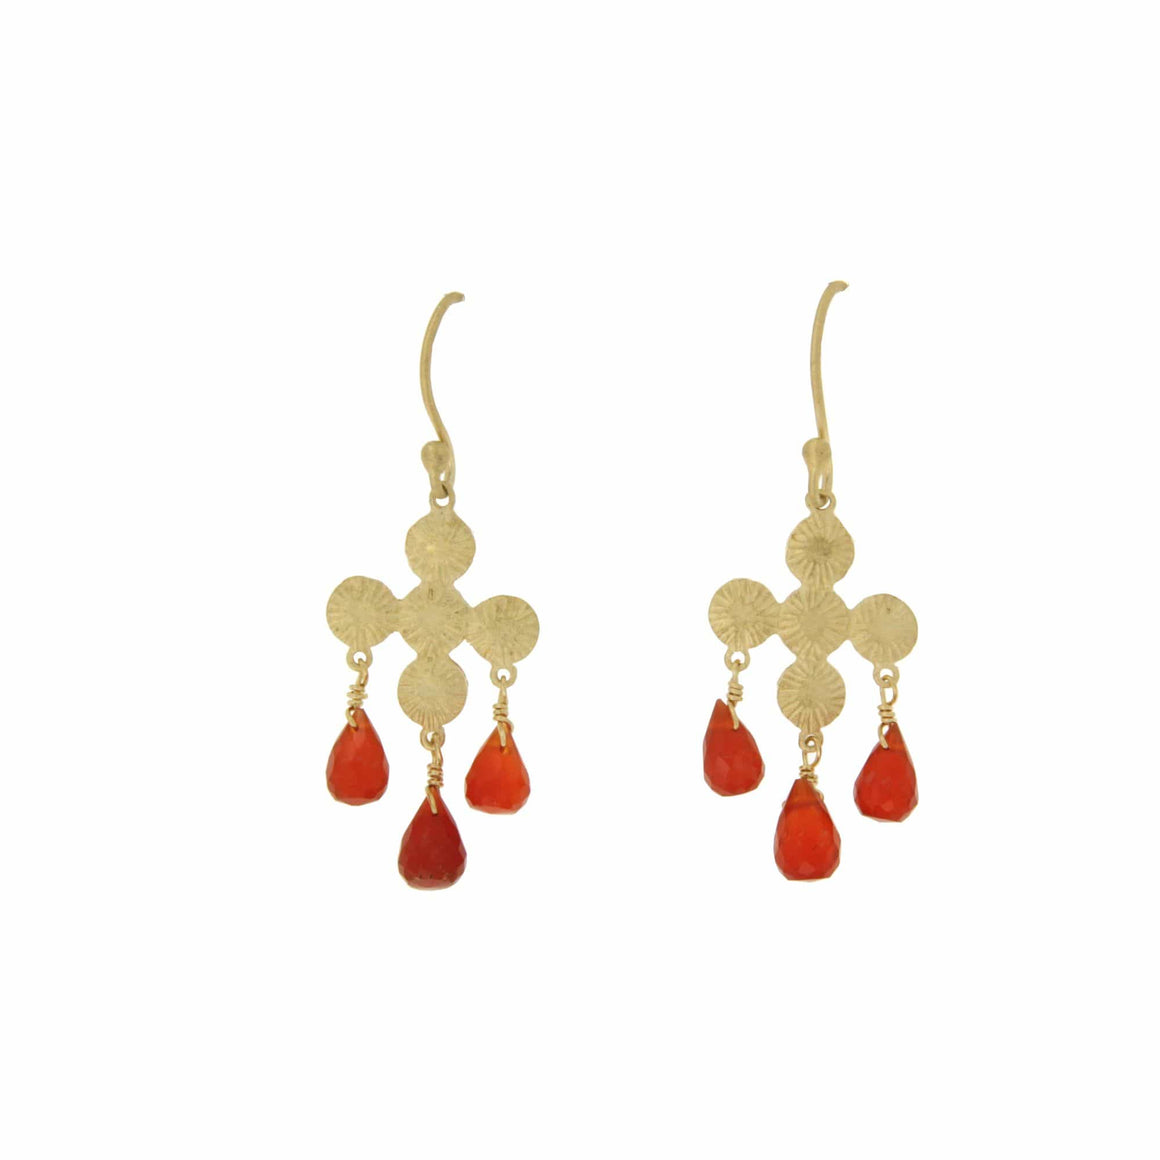 Manjusha Jewels earrings Flame Lotus Drop Earrings in Red Onyx